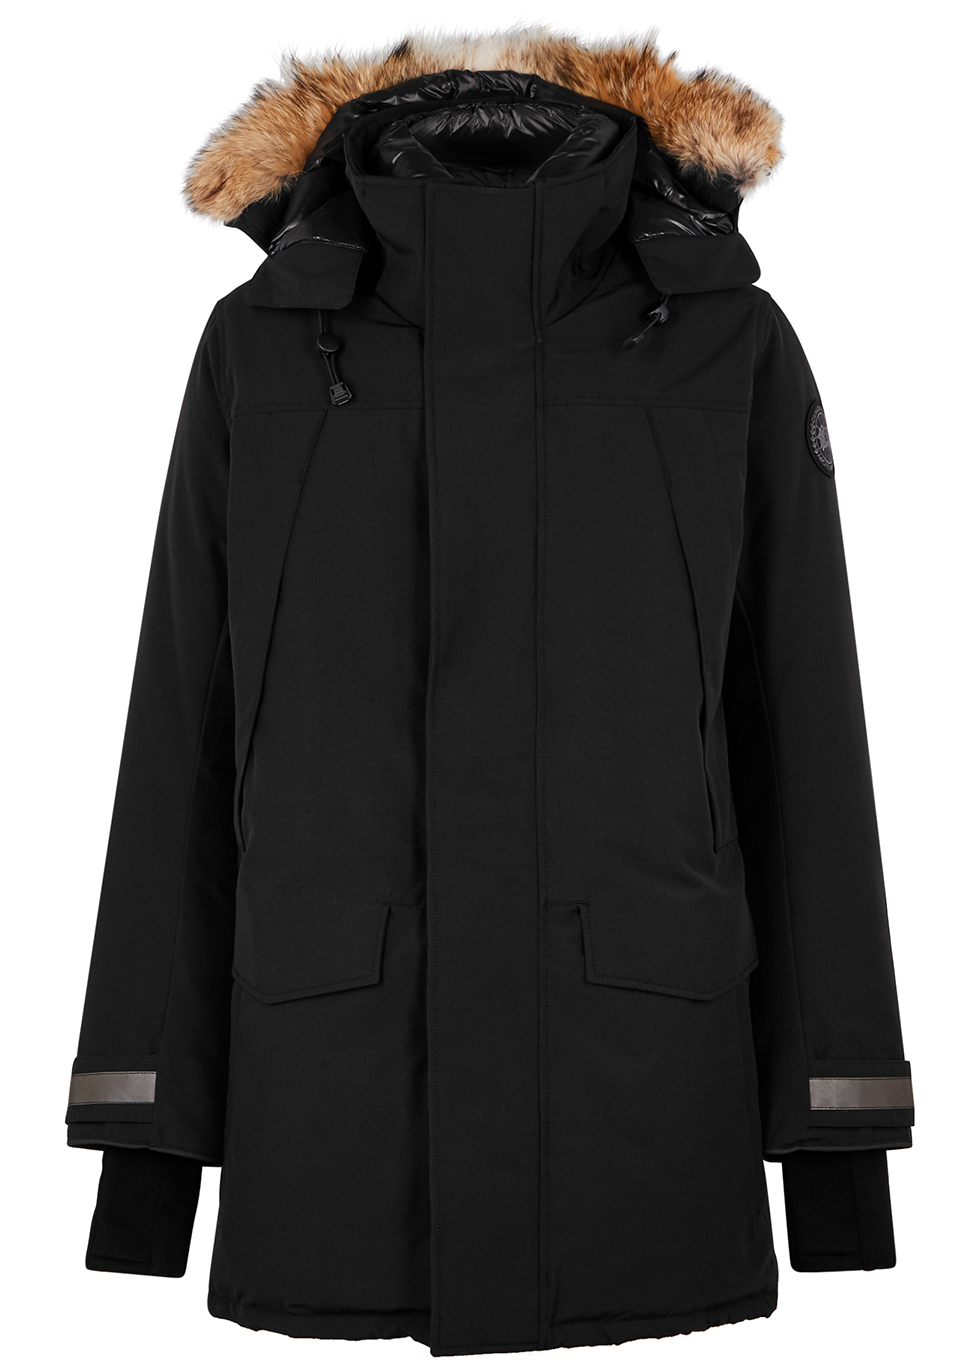 designer mens parka coats with fur hood